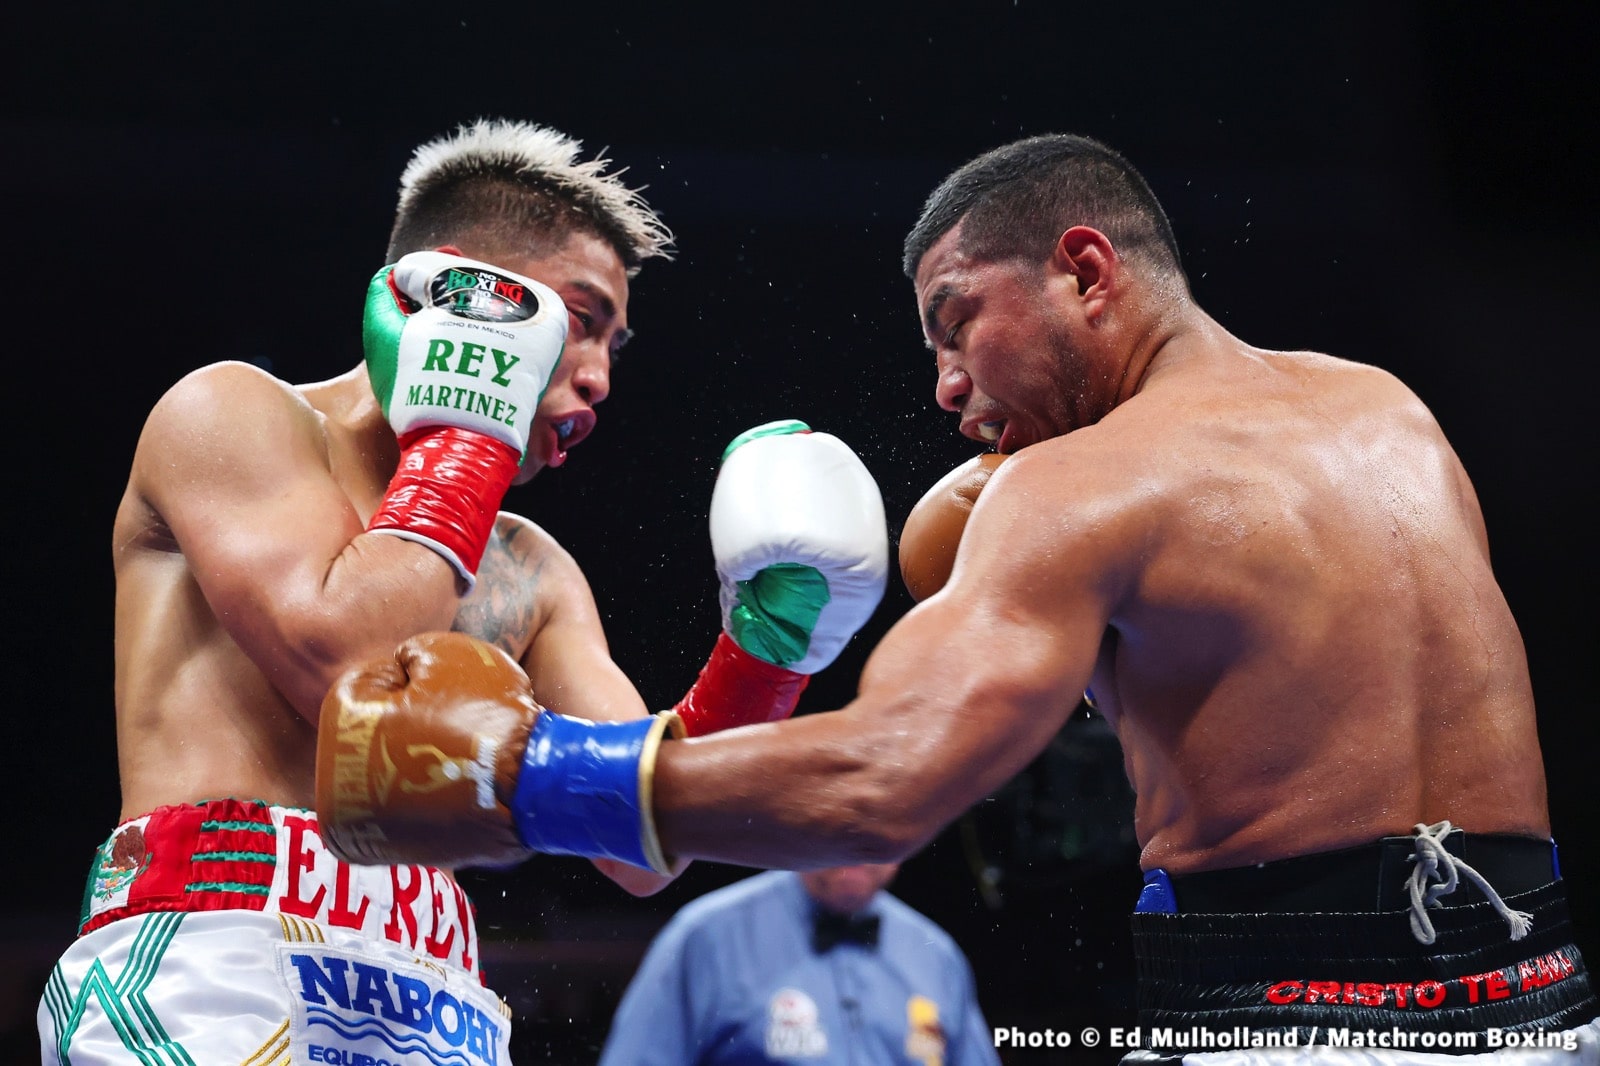 Roman Gonzalez boxing image / photo